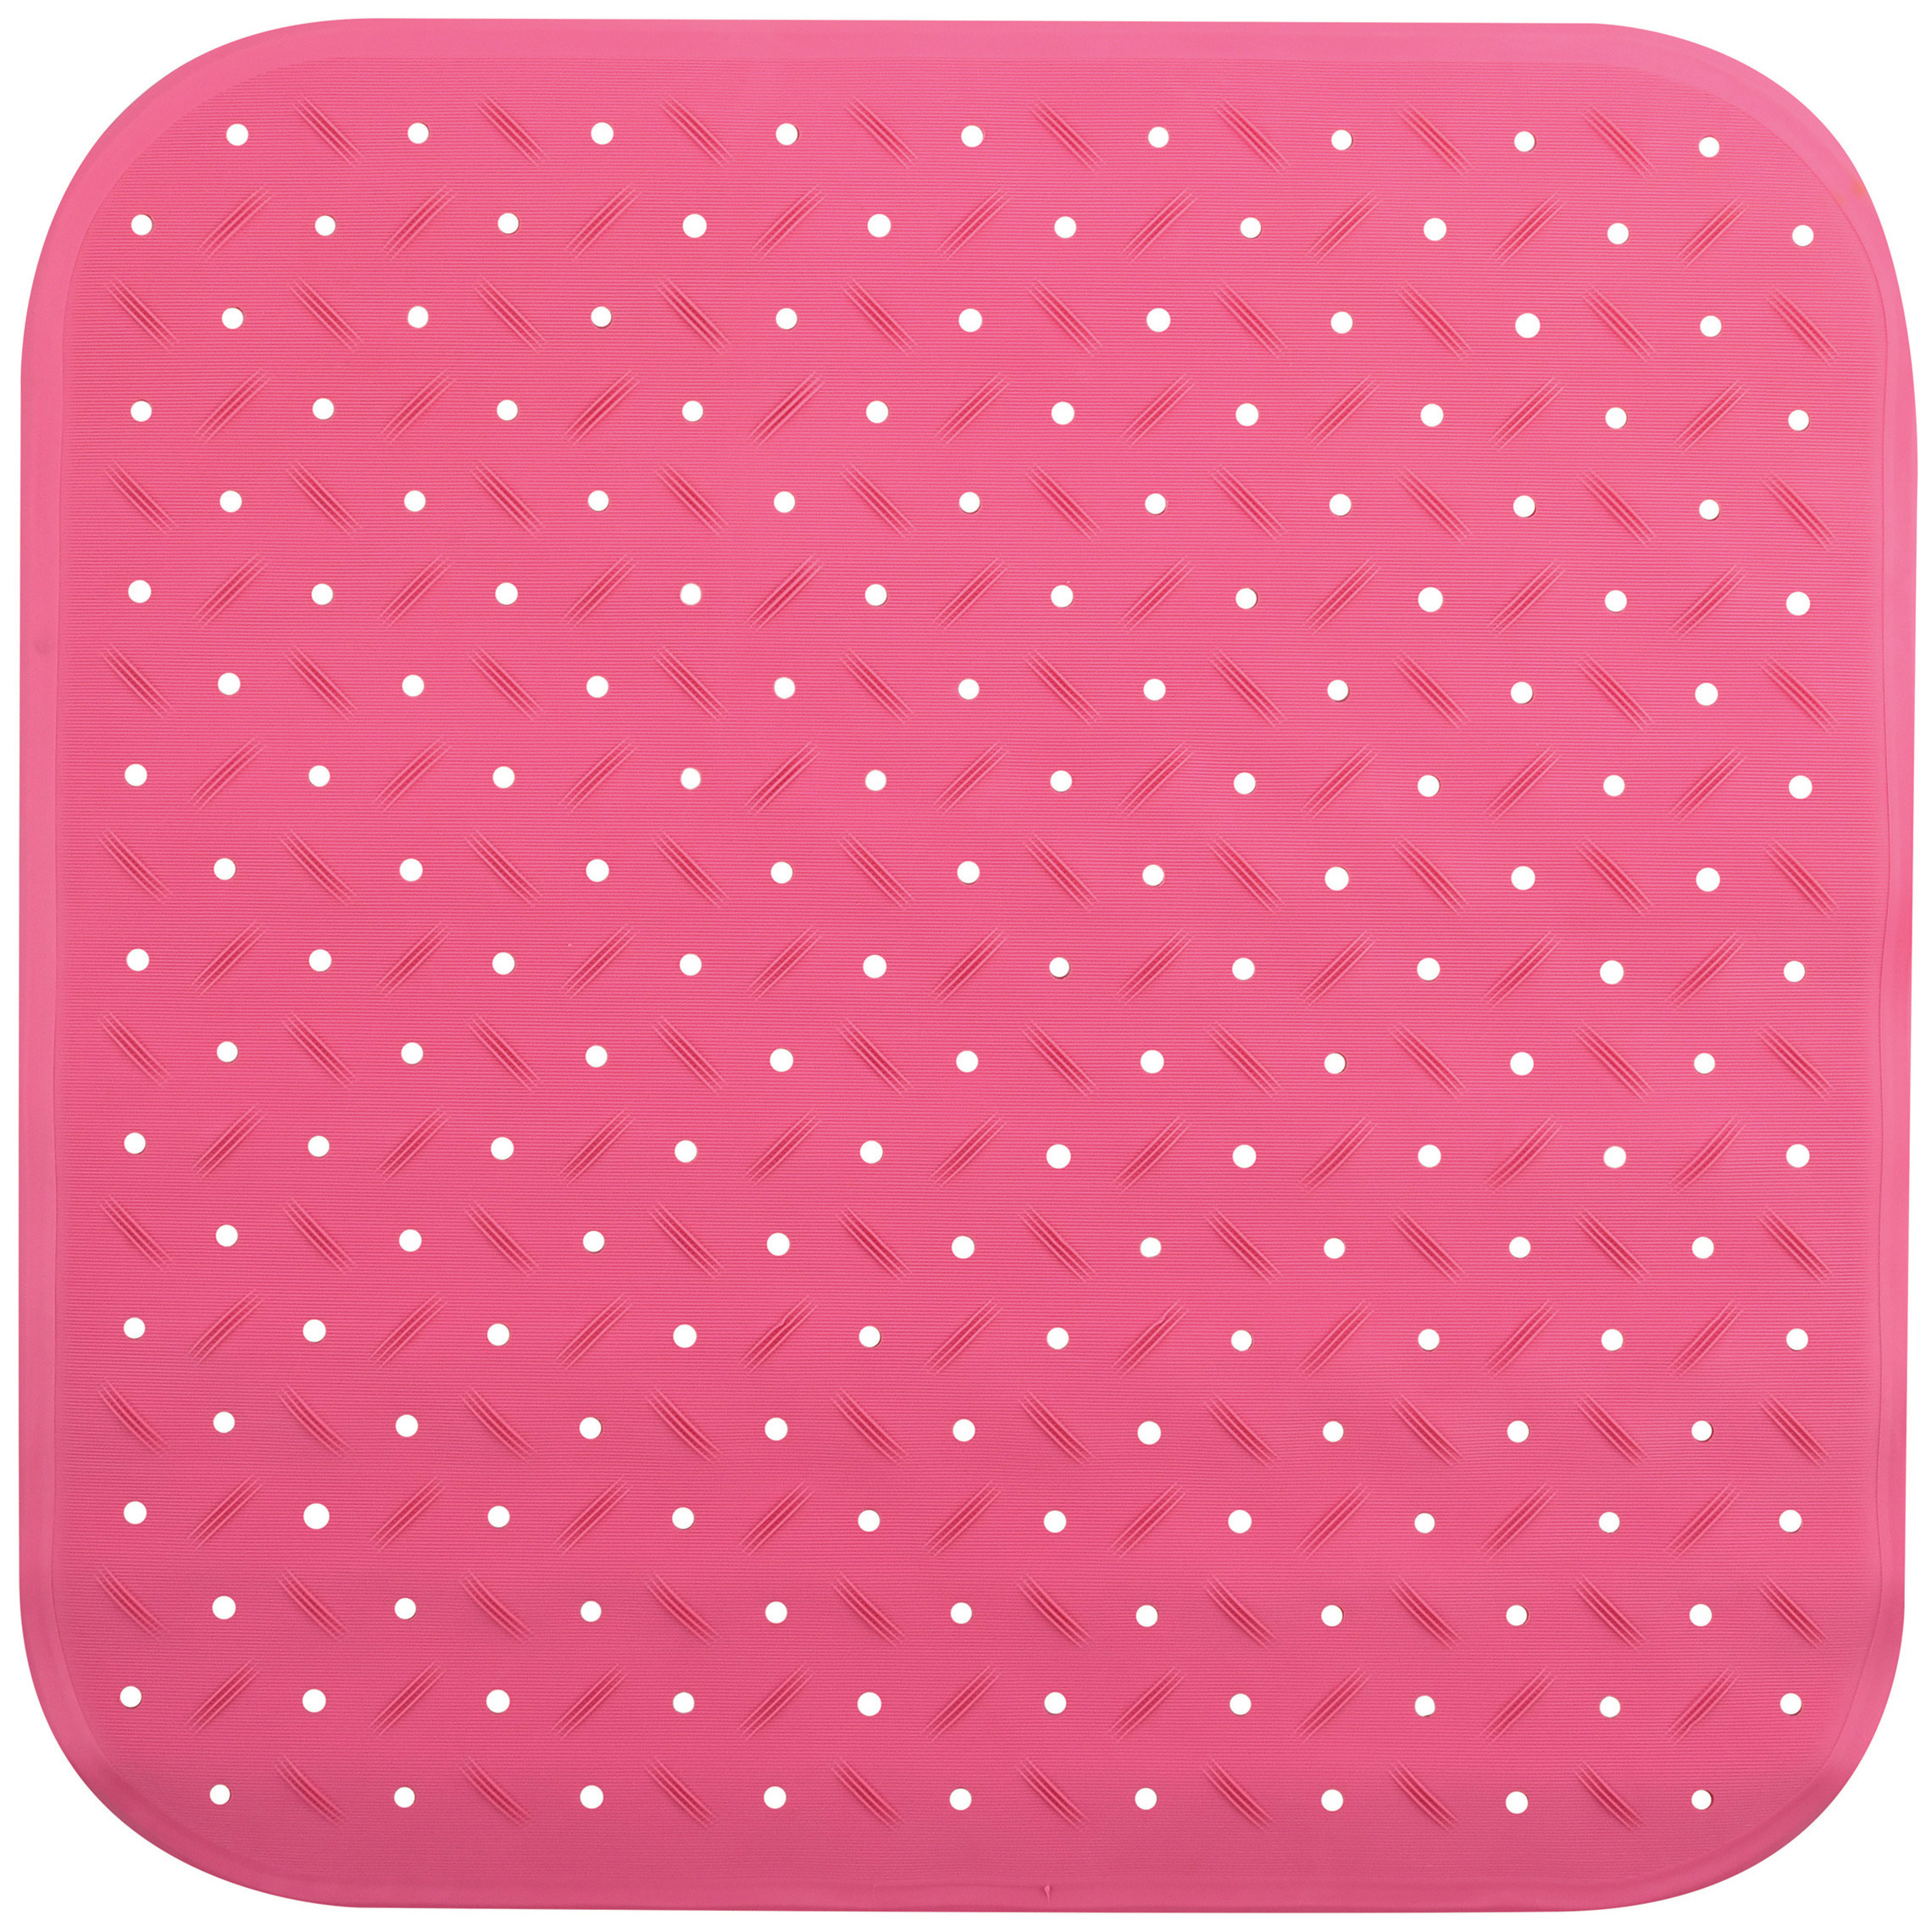 MSV Douche-bad anti-slip mat badkamer rubber fuchsia roze 54 x 54 cm